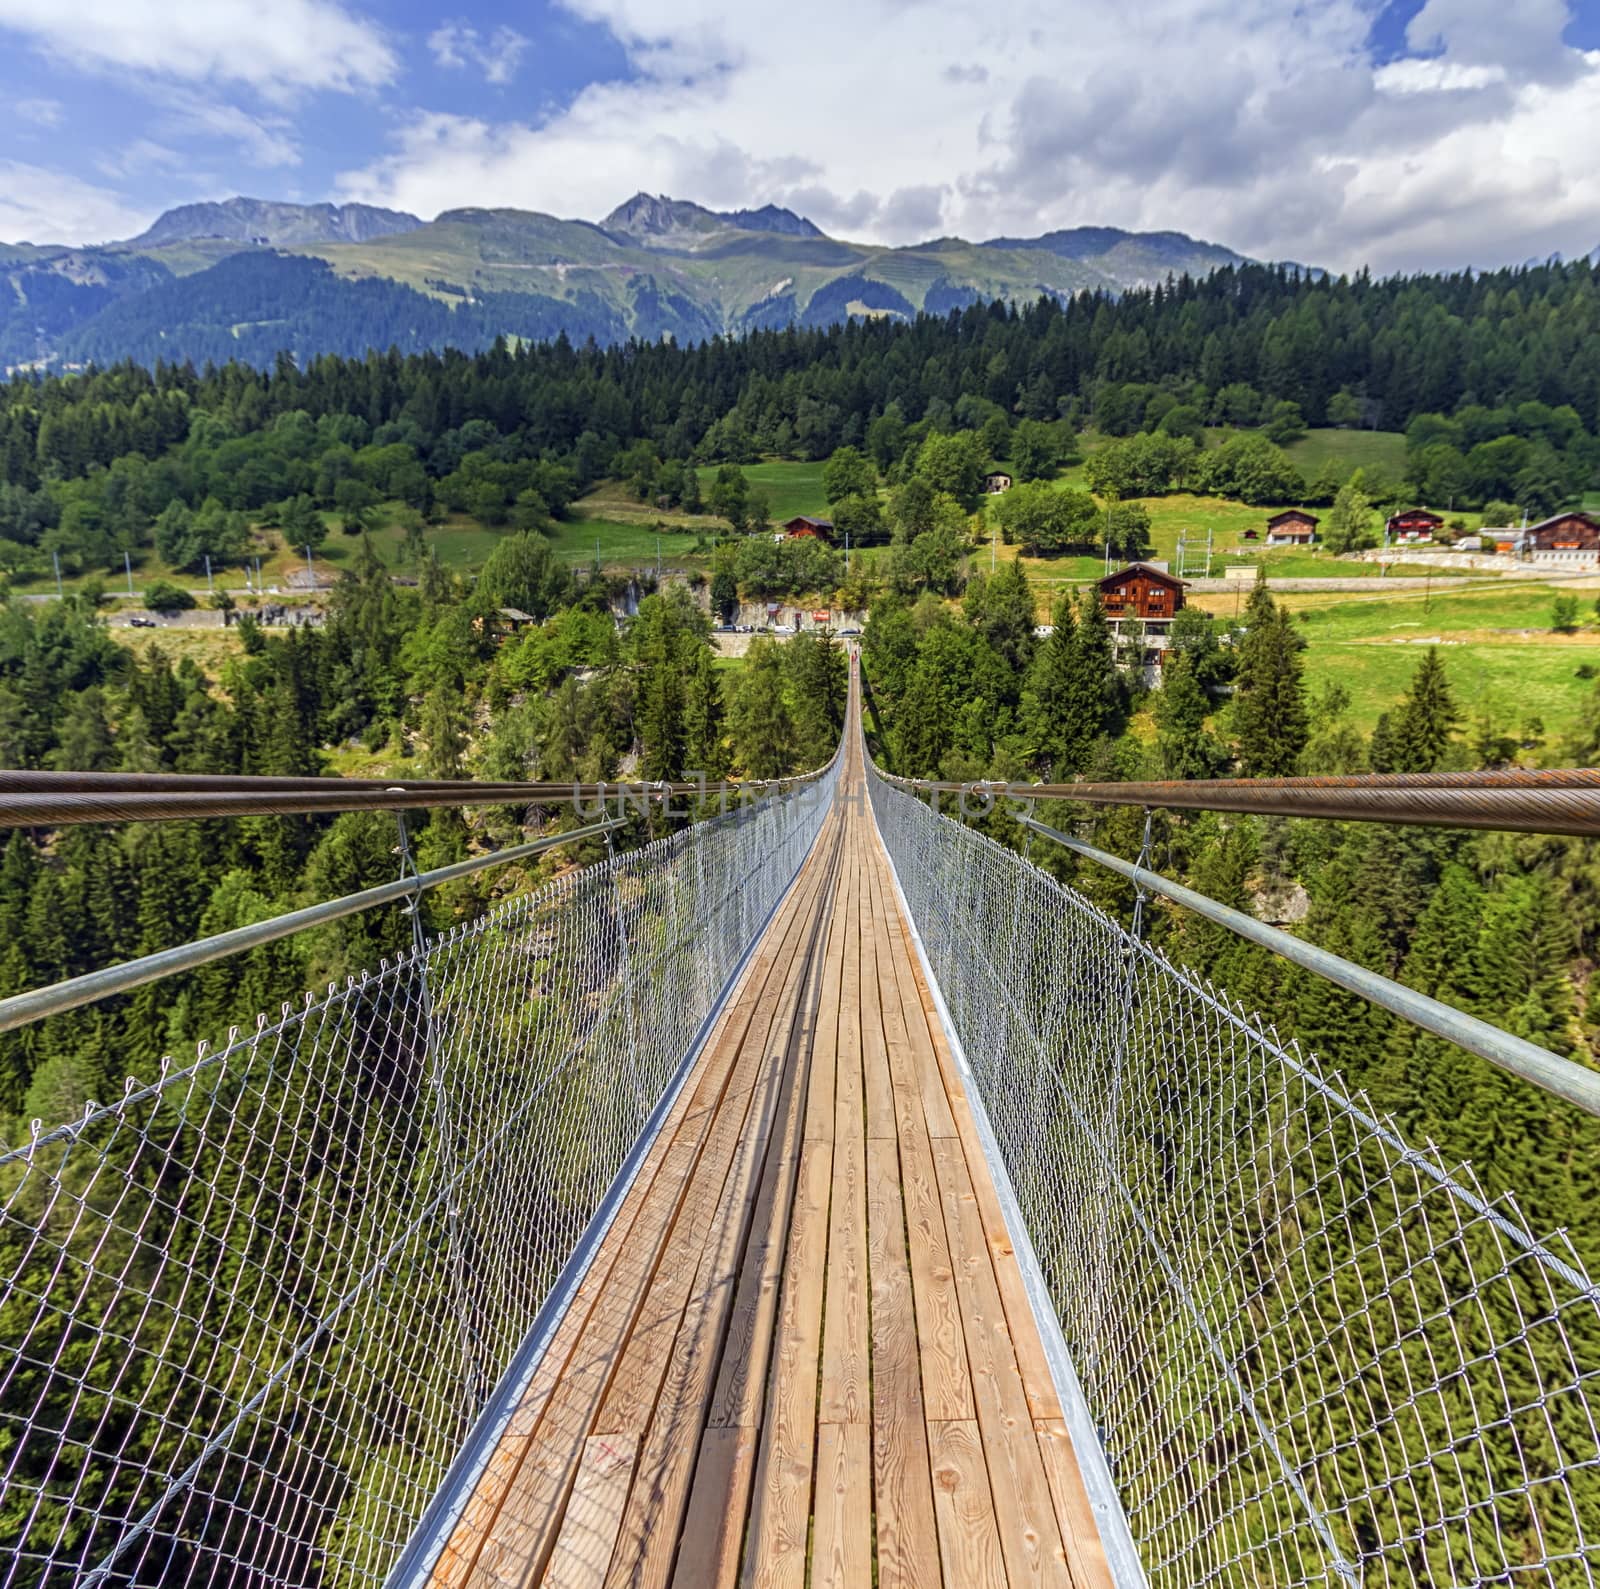 Suspended bridge over Lama gorge in Valais canton, Switzerland by Elenaphotos21